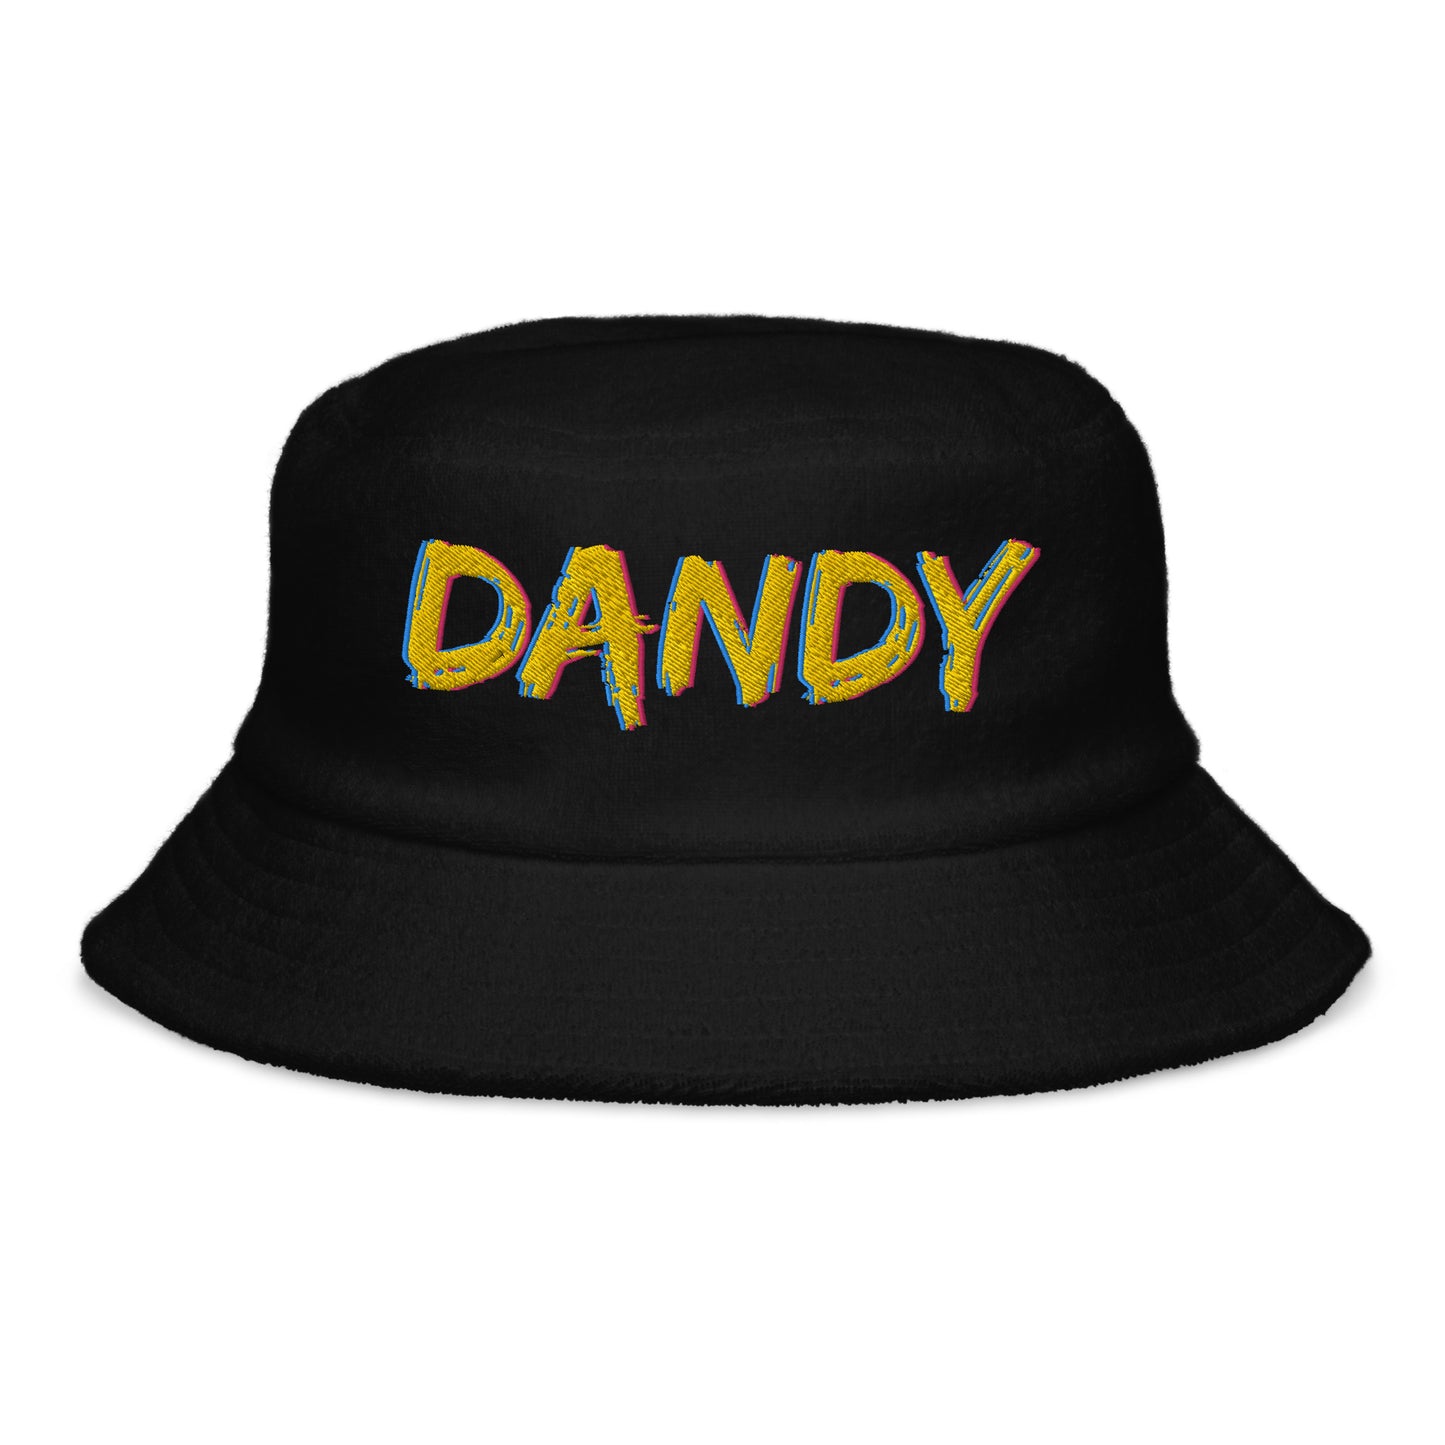 Dandy terry cloth bucket hat